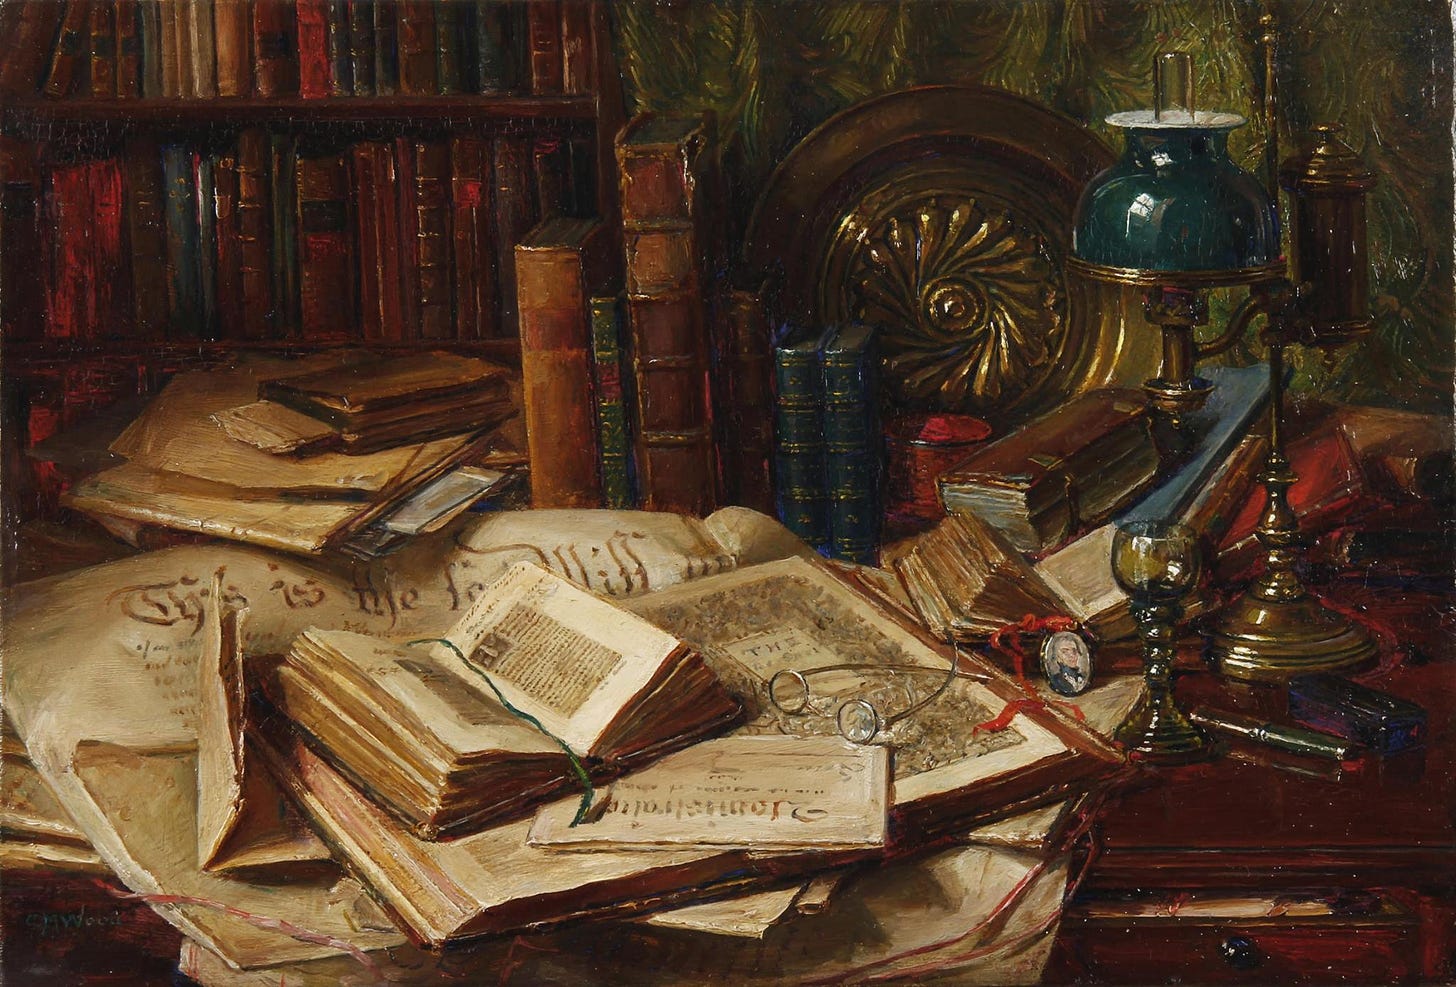 File:Catherine M. Wood Old books.jpg - Wikimedia Commons